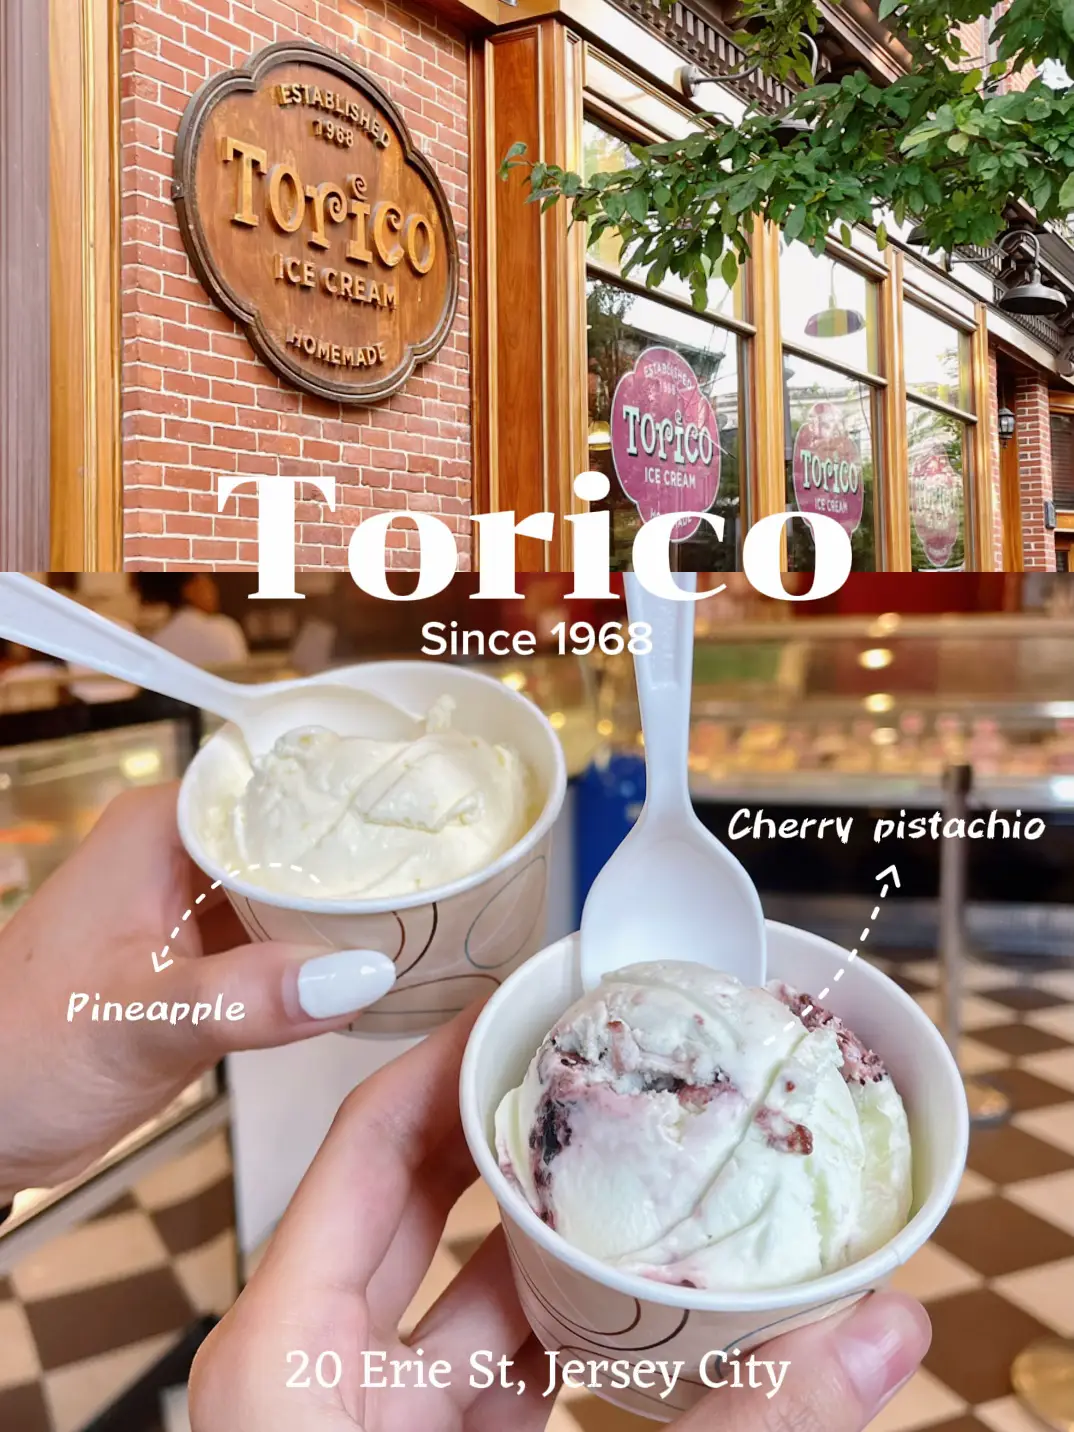 Torico Ice Cream